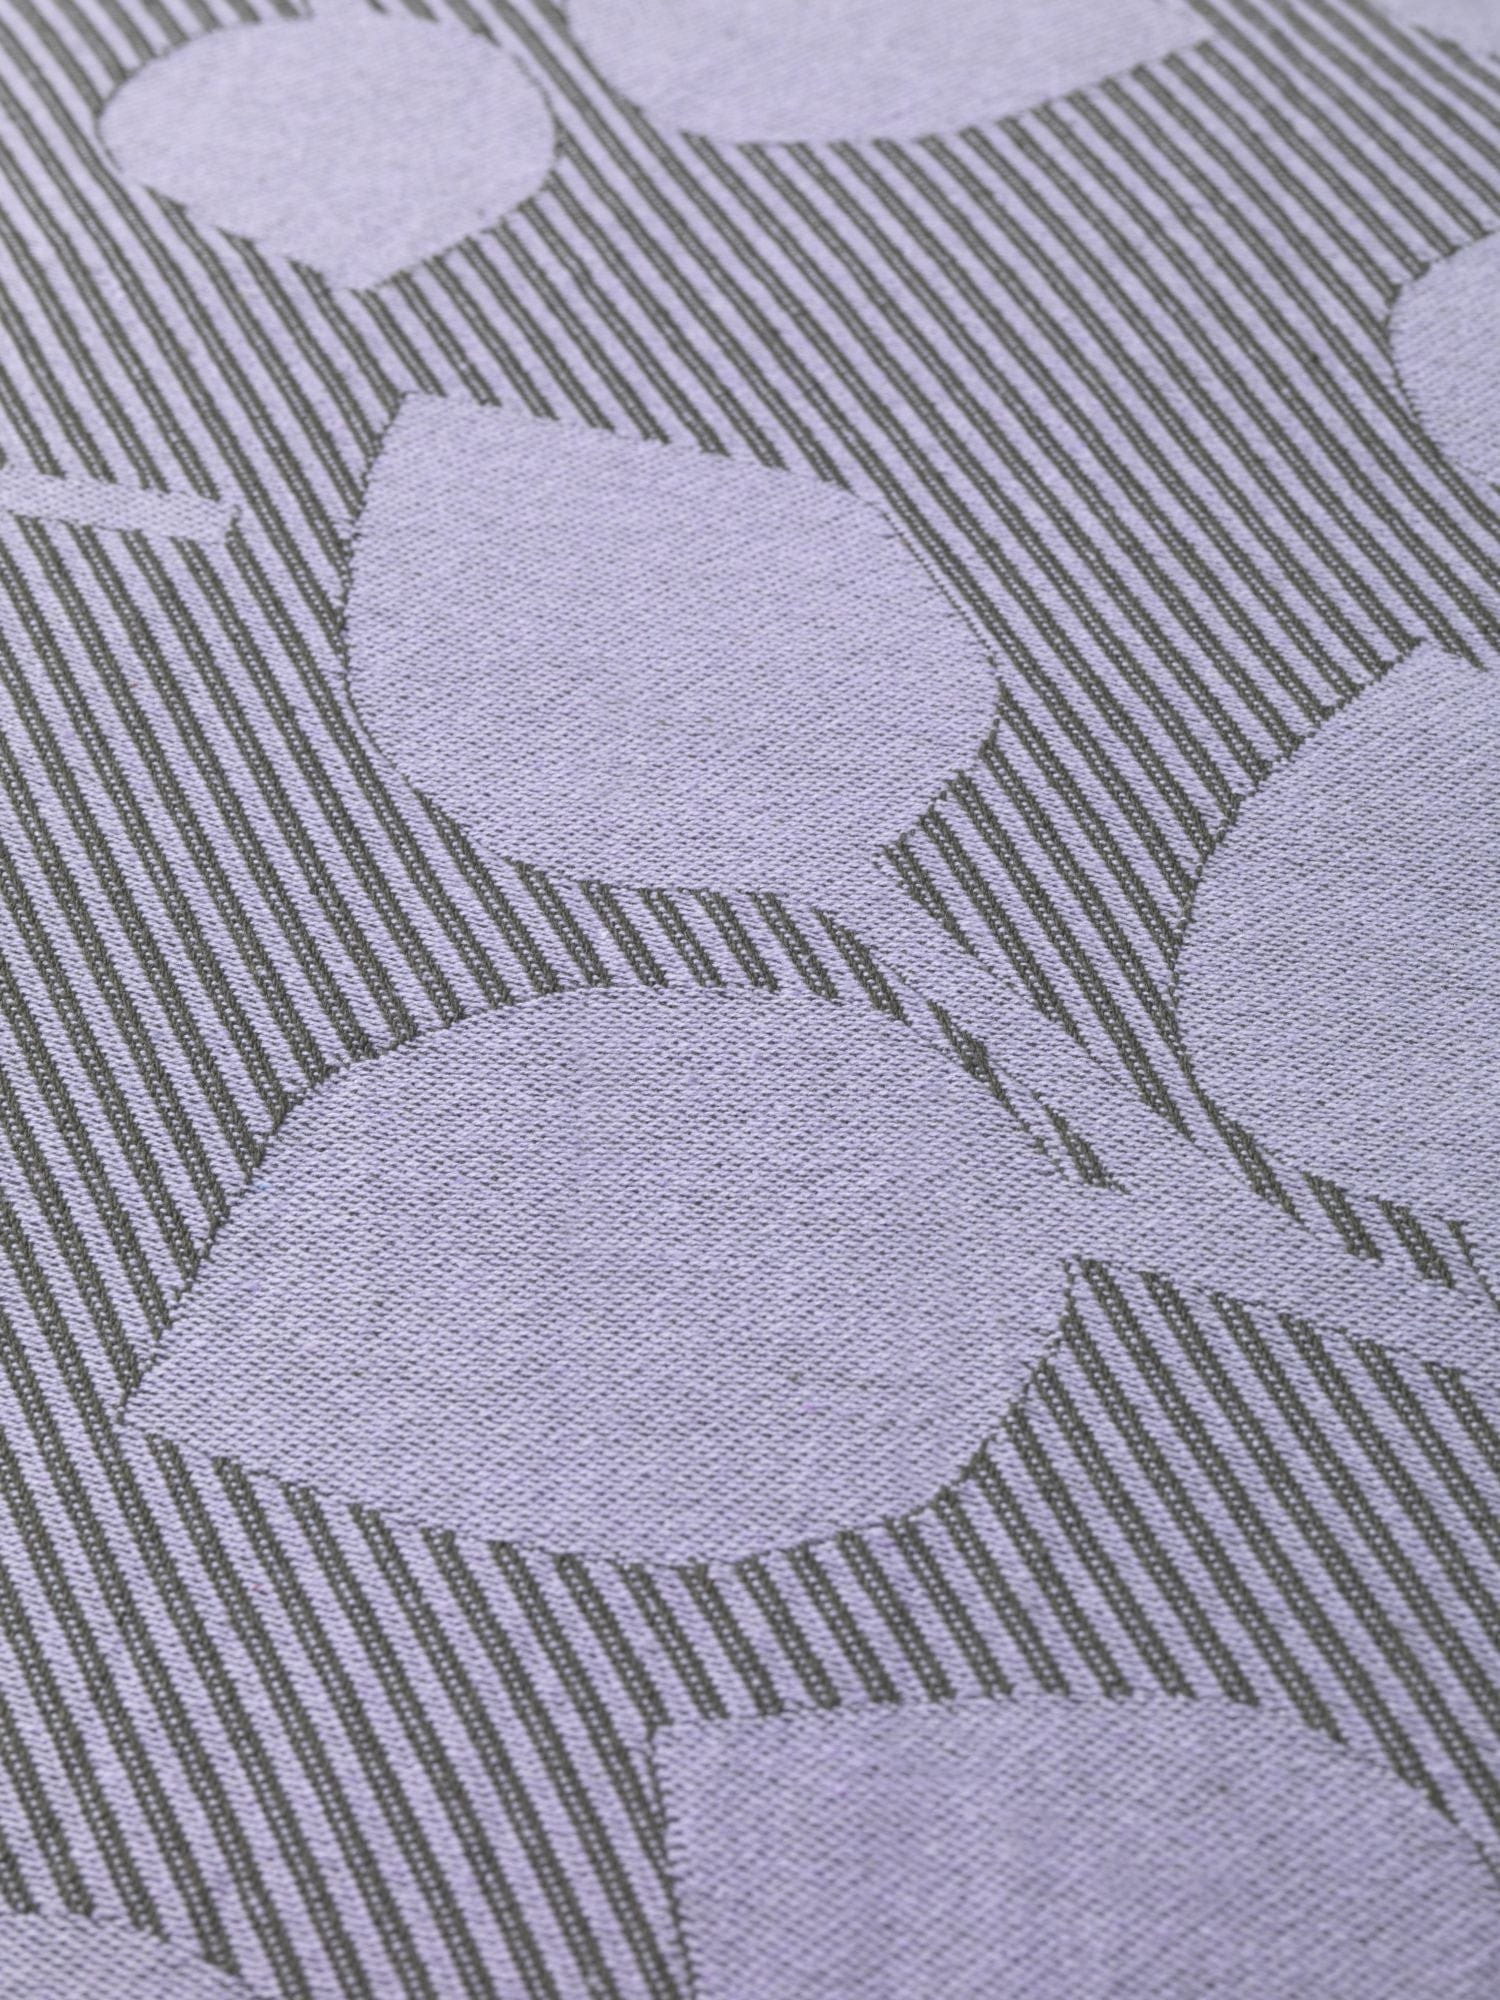 Rosendahl Rosendahl Textiles Outdoor Natura Pallehynde, Grøn/Lavendel